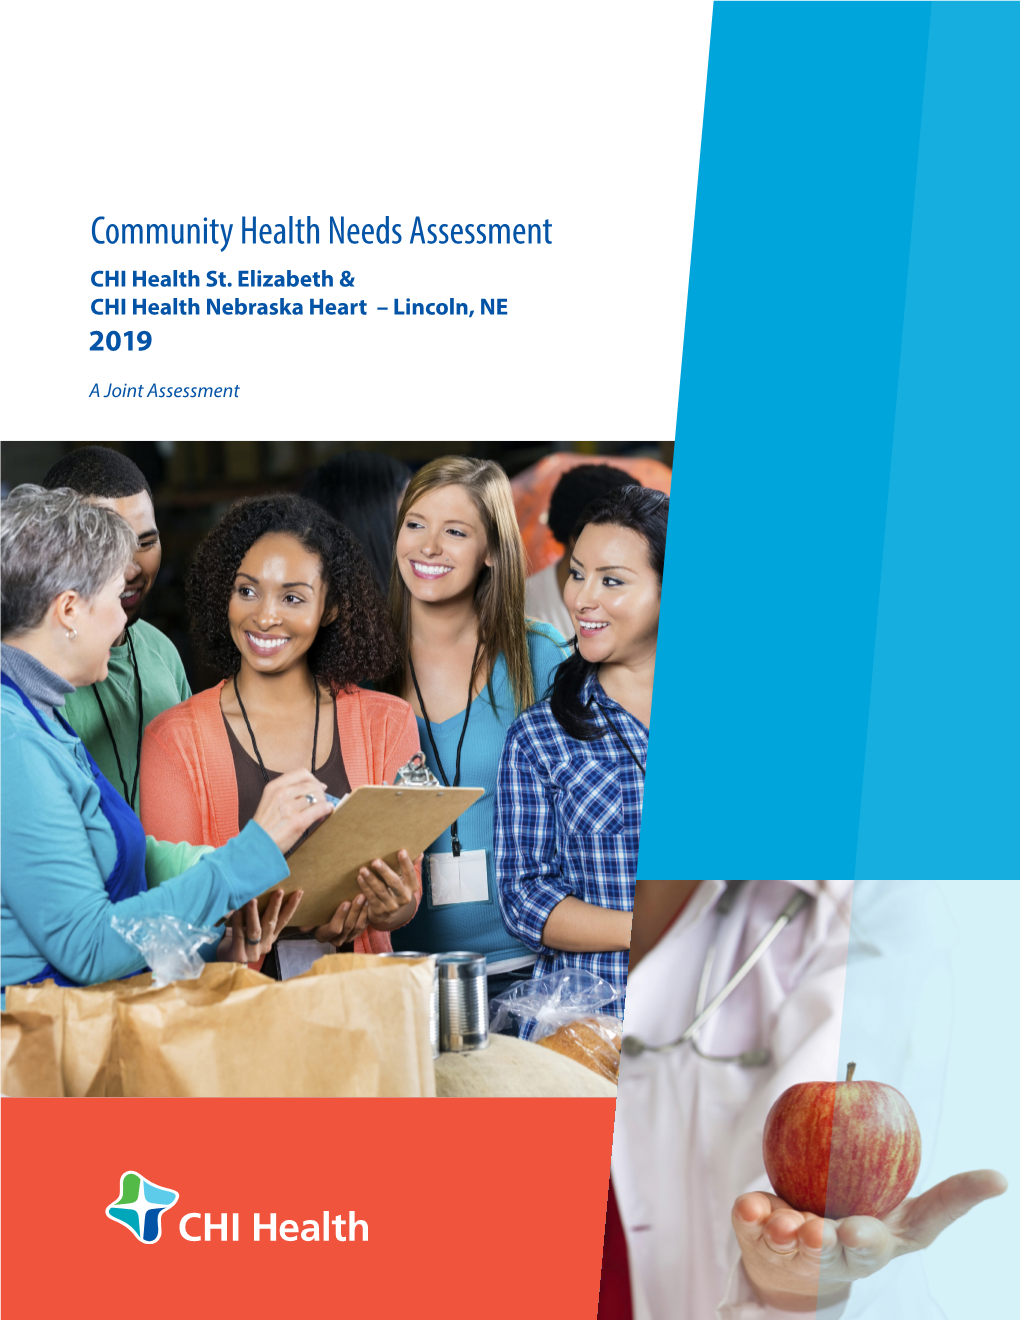 CHI Health St. Elizabeth and Nebraska Heart 2019 Community Health Needs Assessment